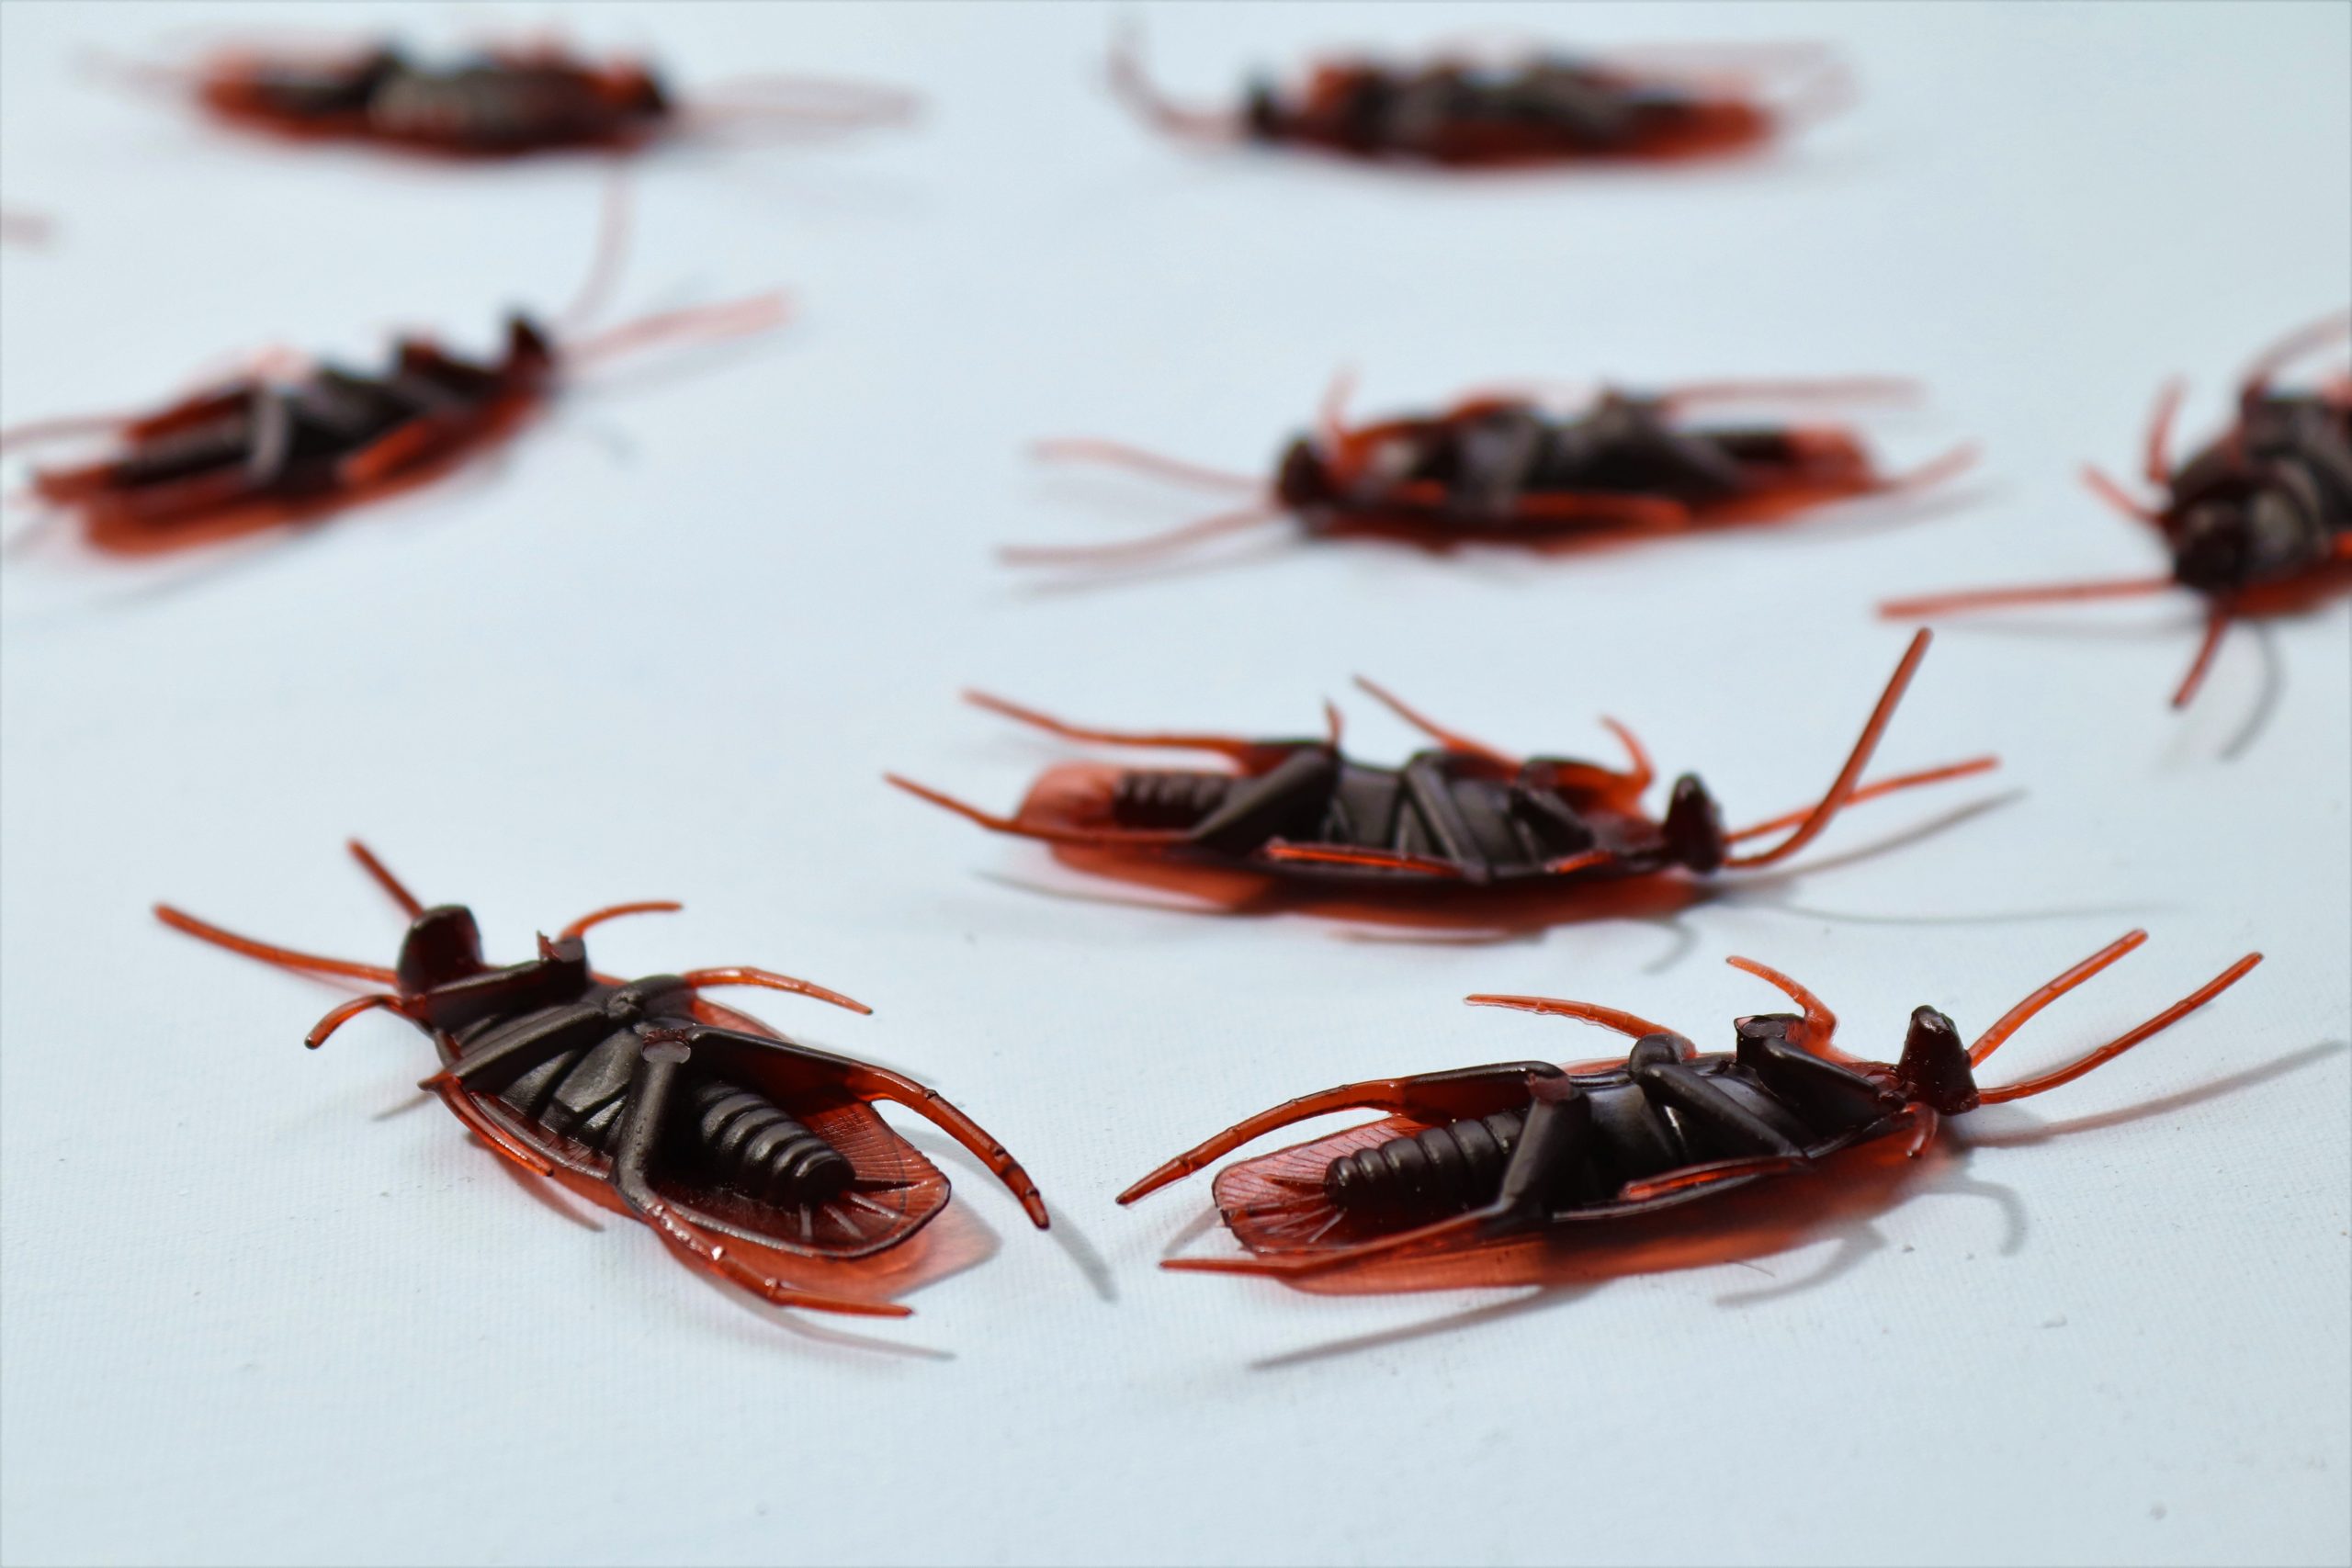 Спреи не помогают: как избавиться от тараканов в доме раз и навсегда